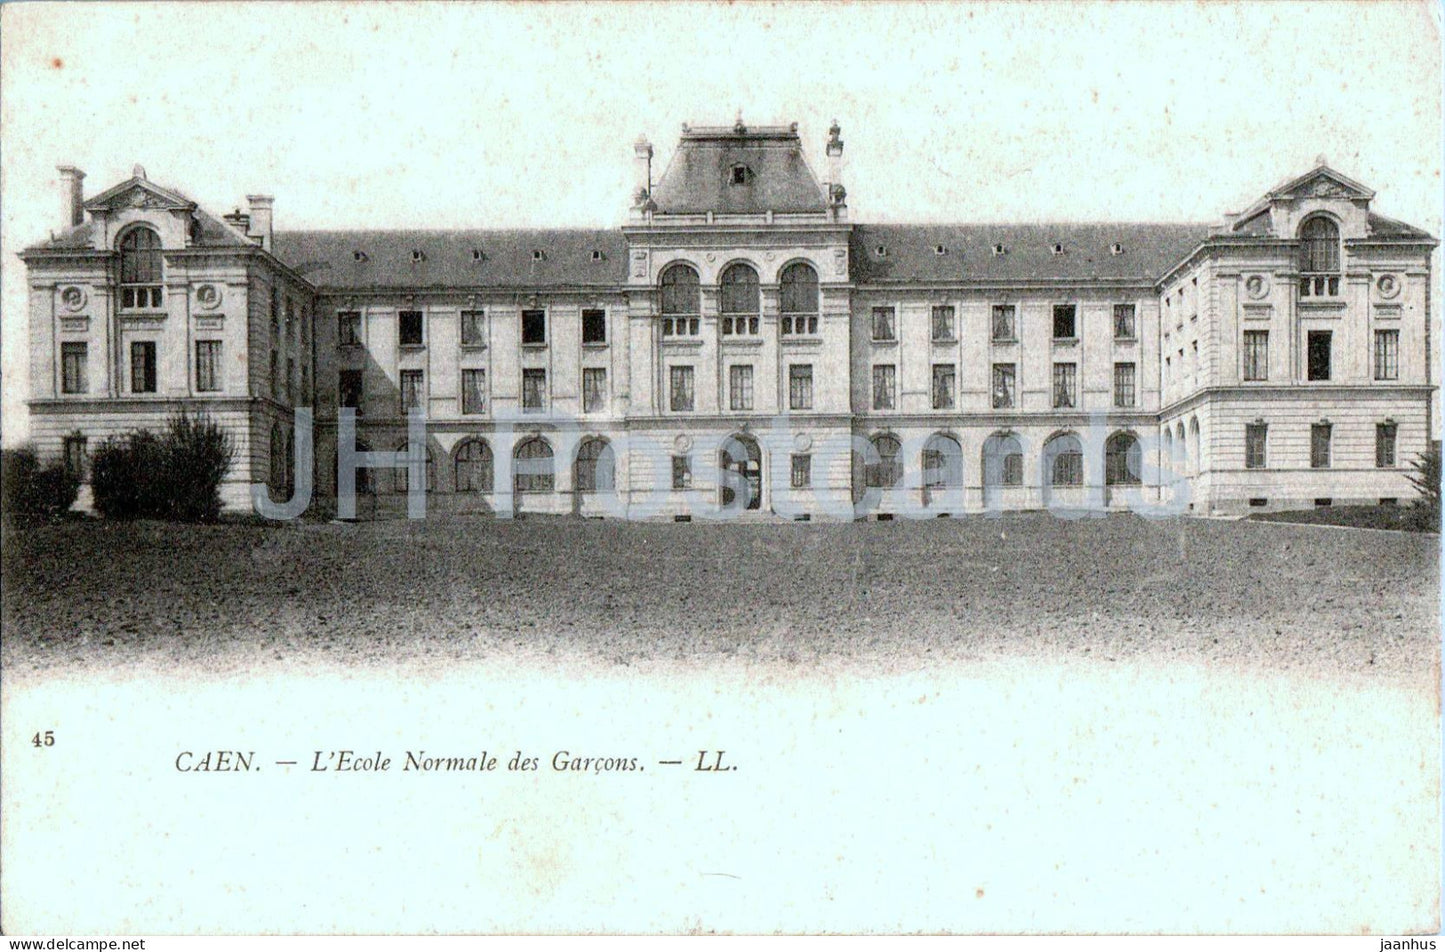 Caen - L'Ecole Normale des Garcons - school - 45 - old postcard - France - unused - JH Postcards